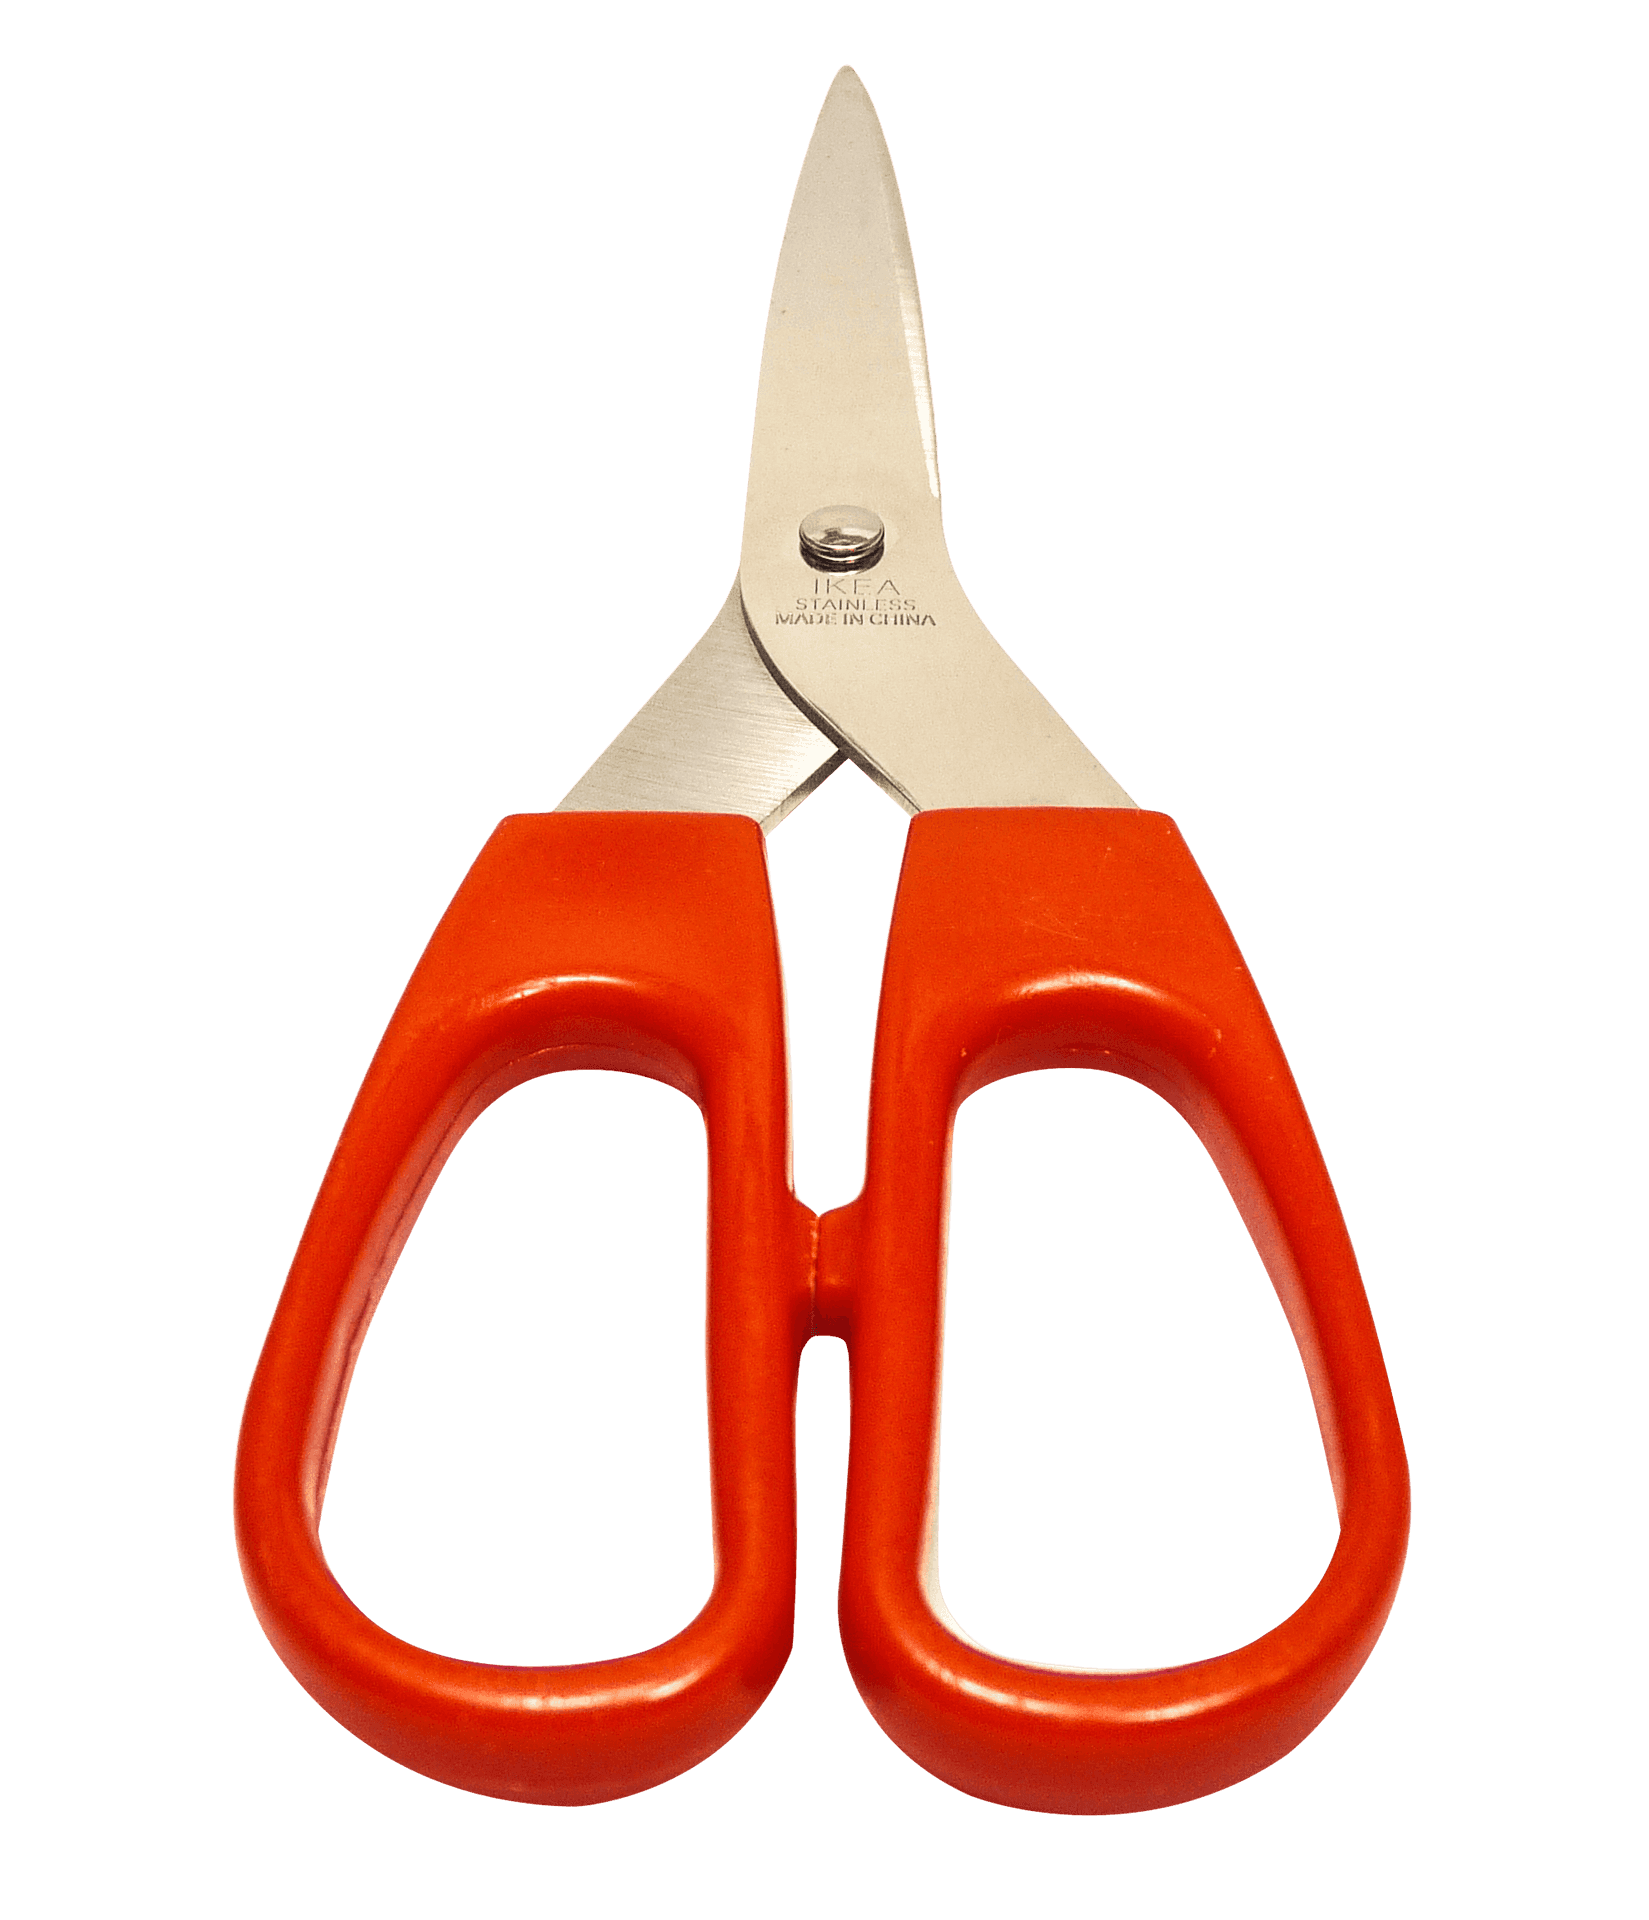 Orange Handled Stainless Steel Scissors PNG image